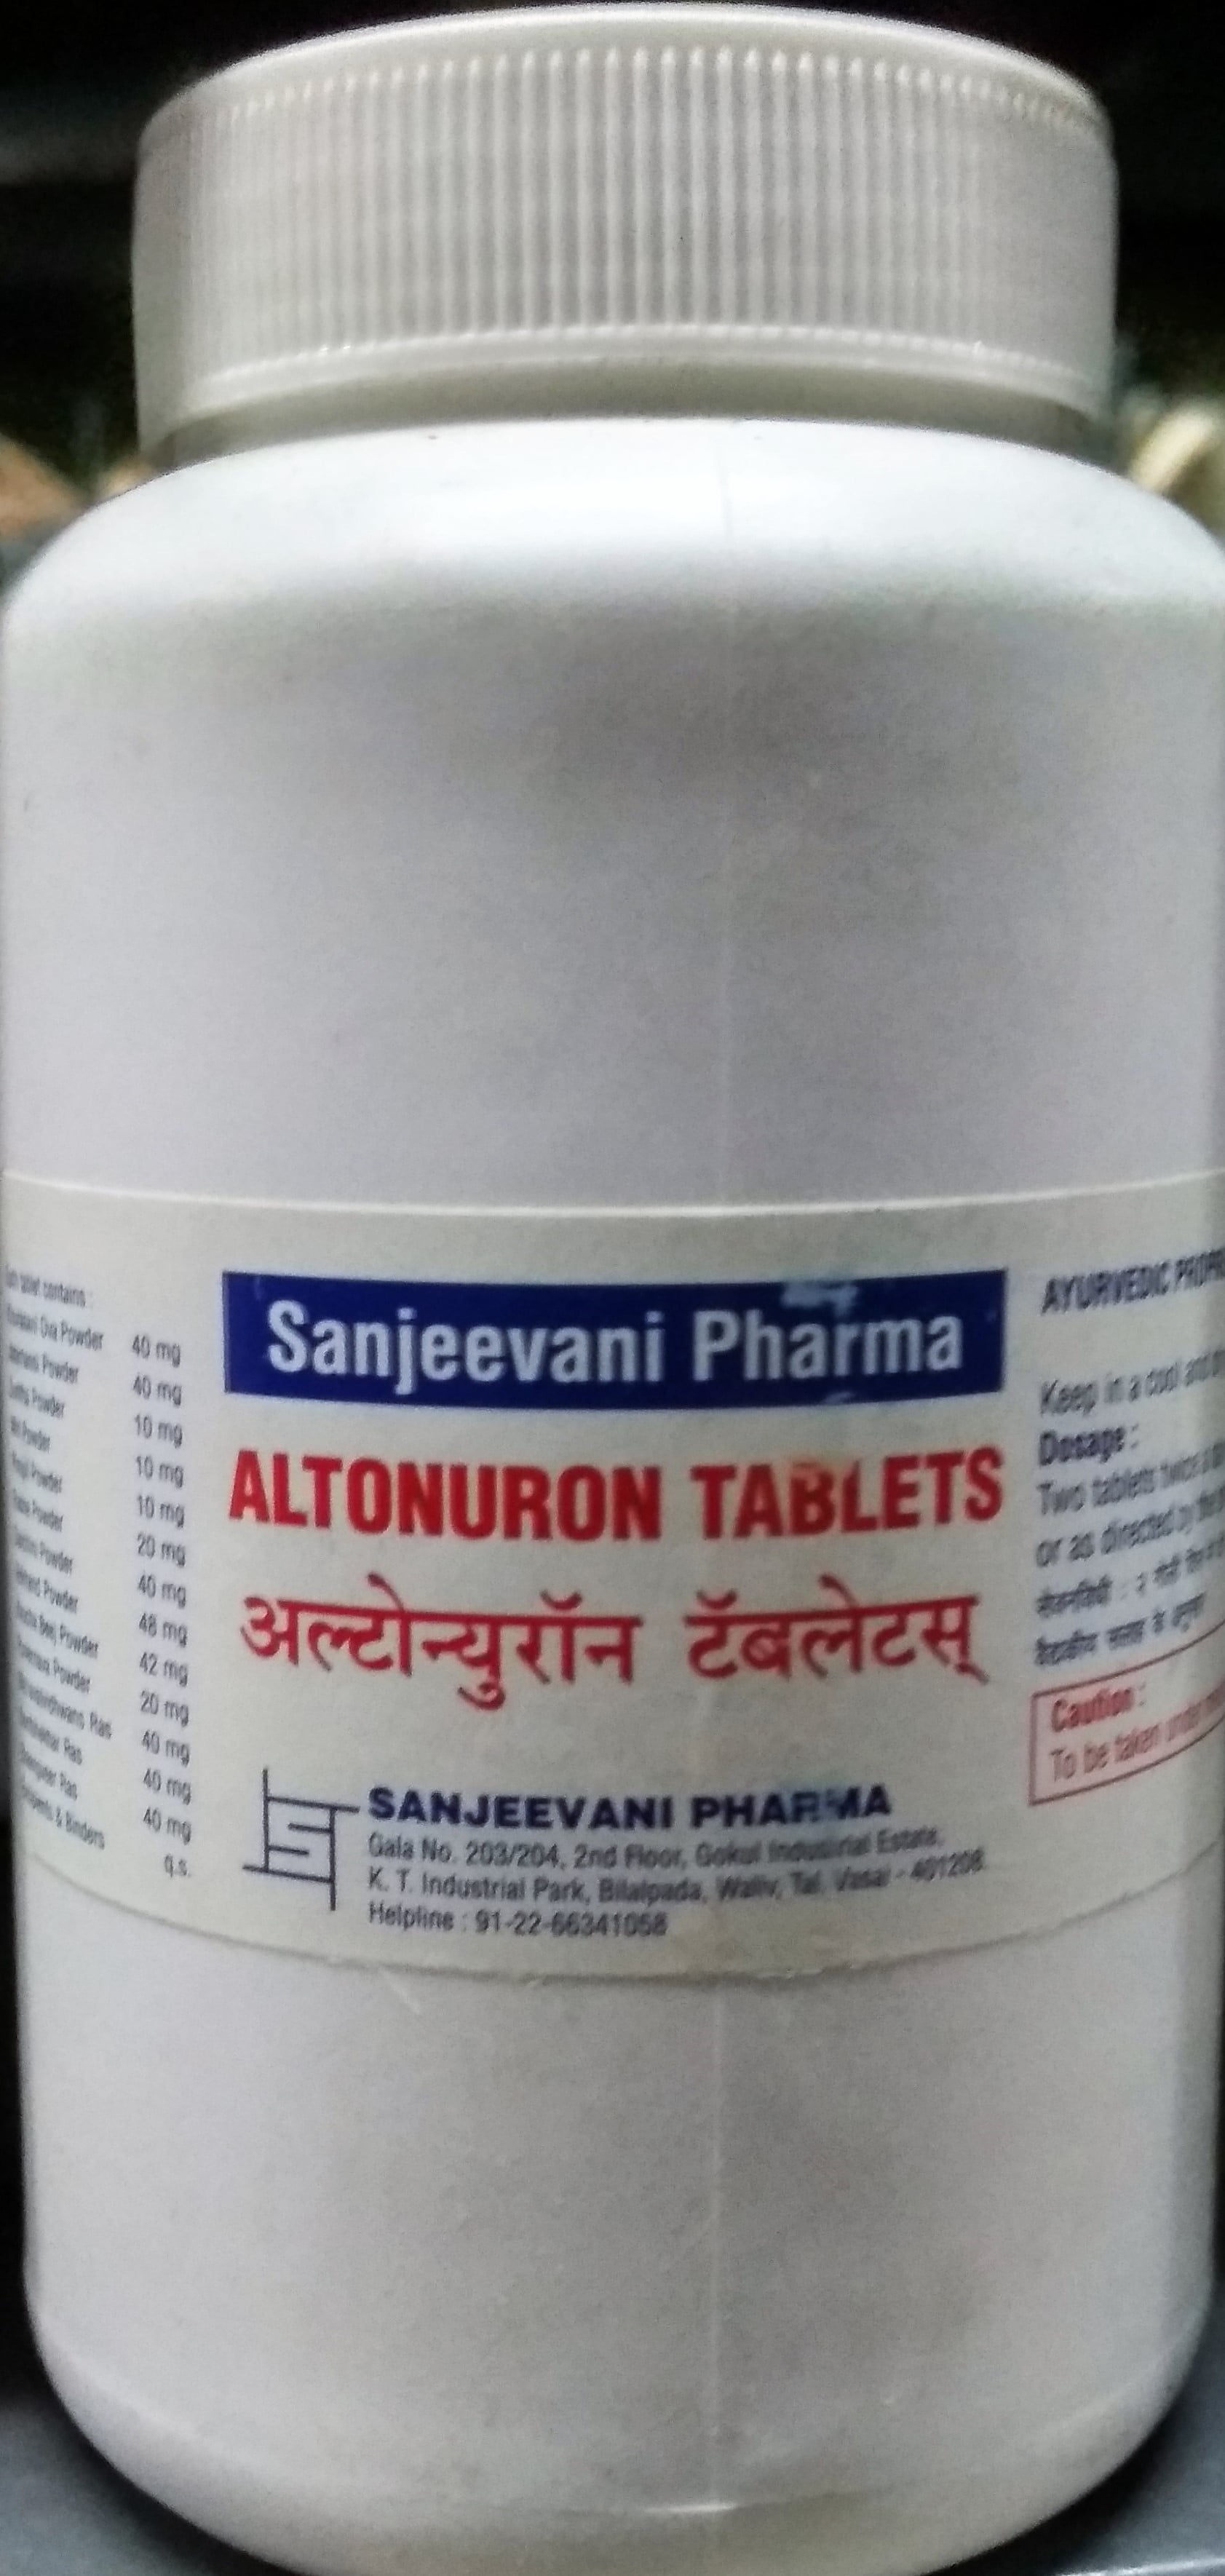 altonuron 30tab upto 20% off sanjeevani pharma mumbai